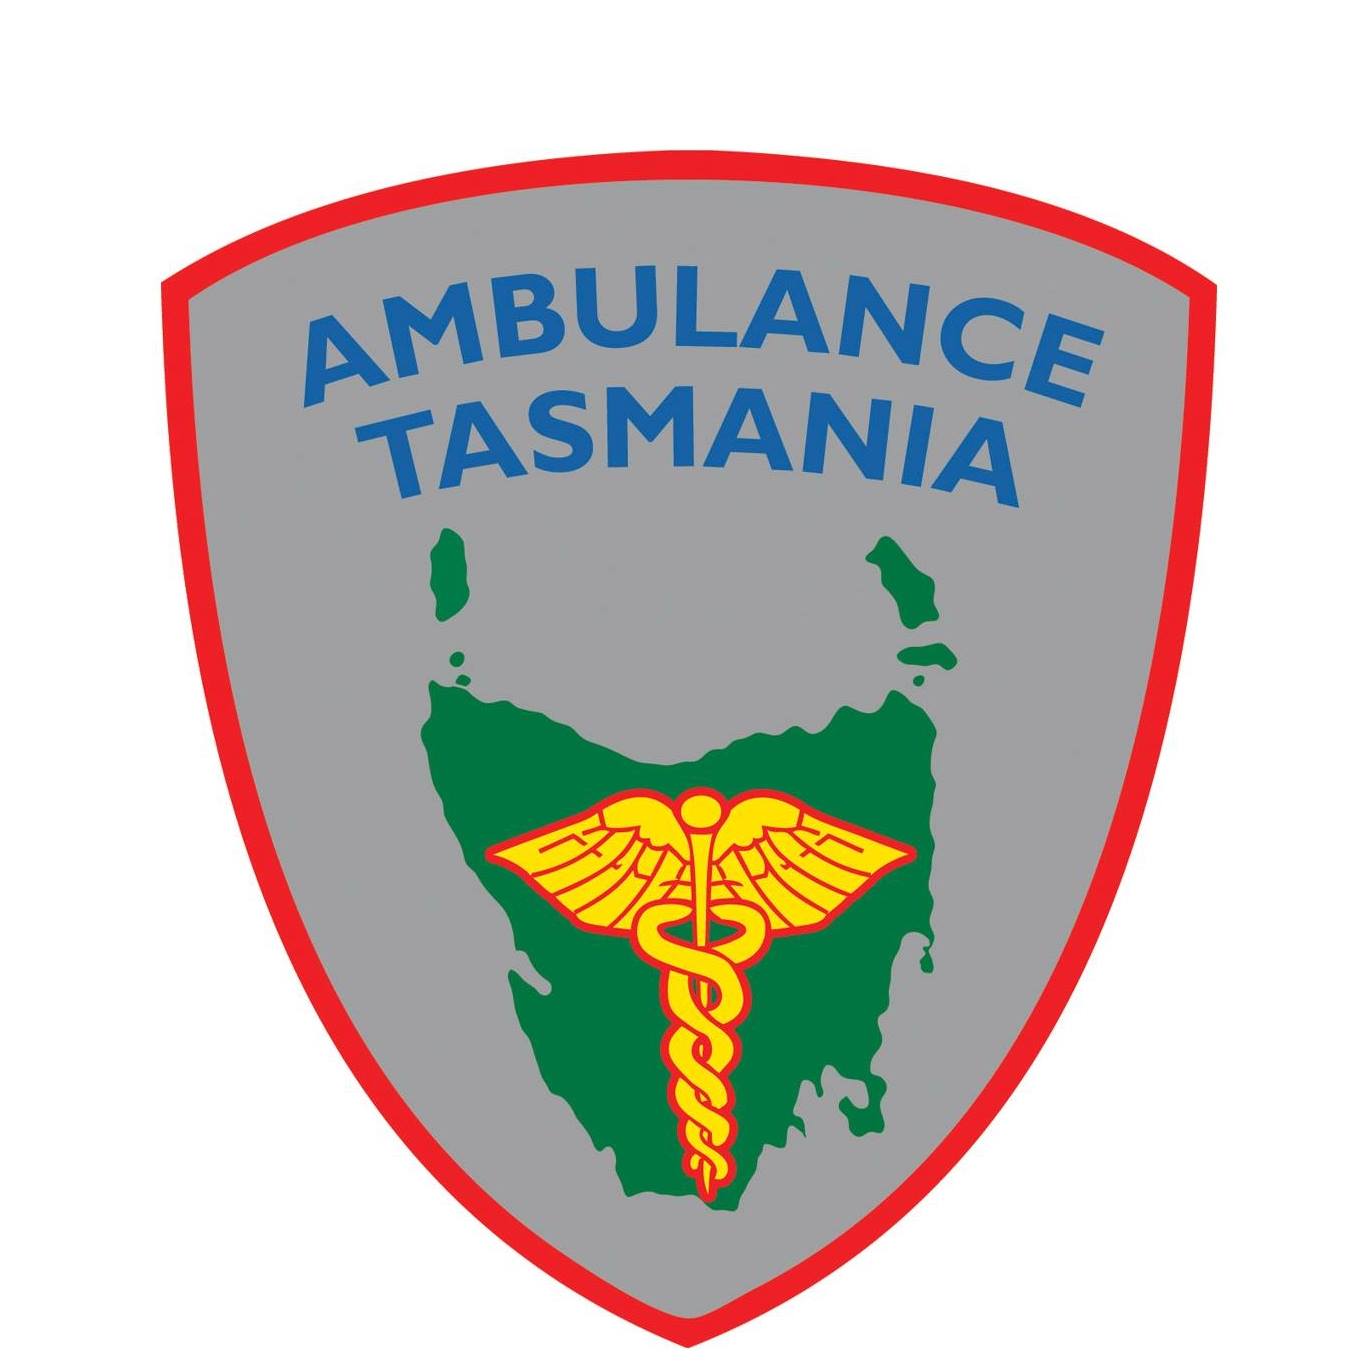 Ambulance_Tasmania_logo